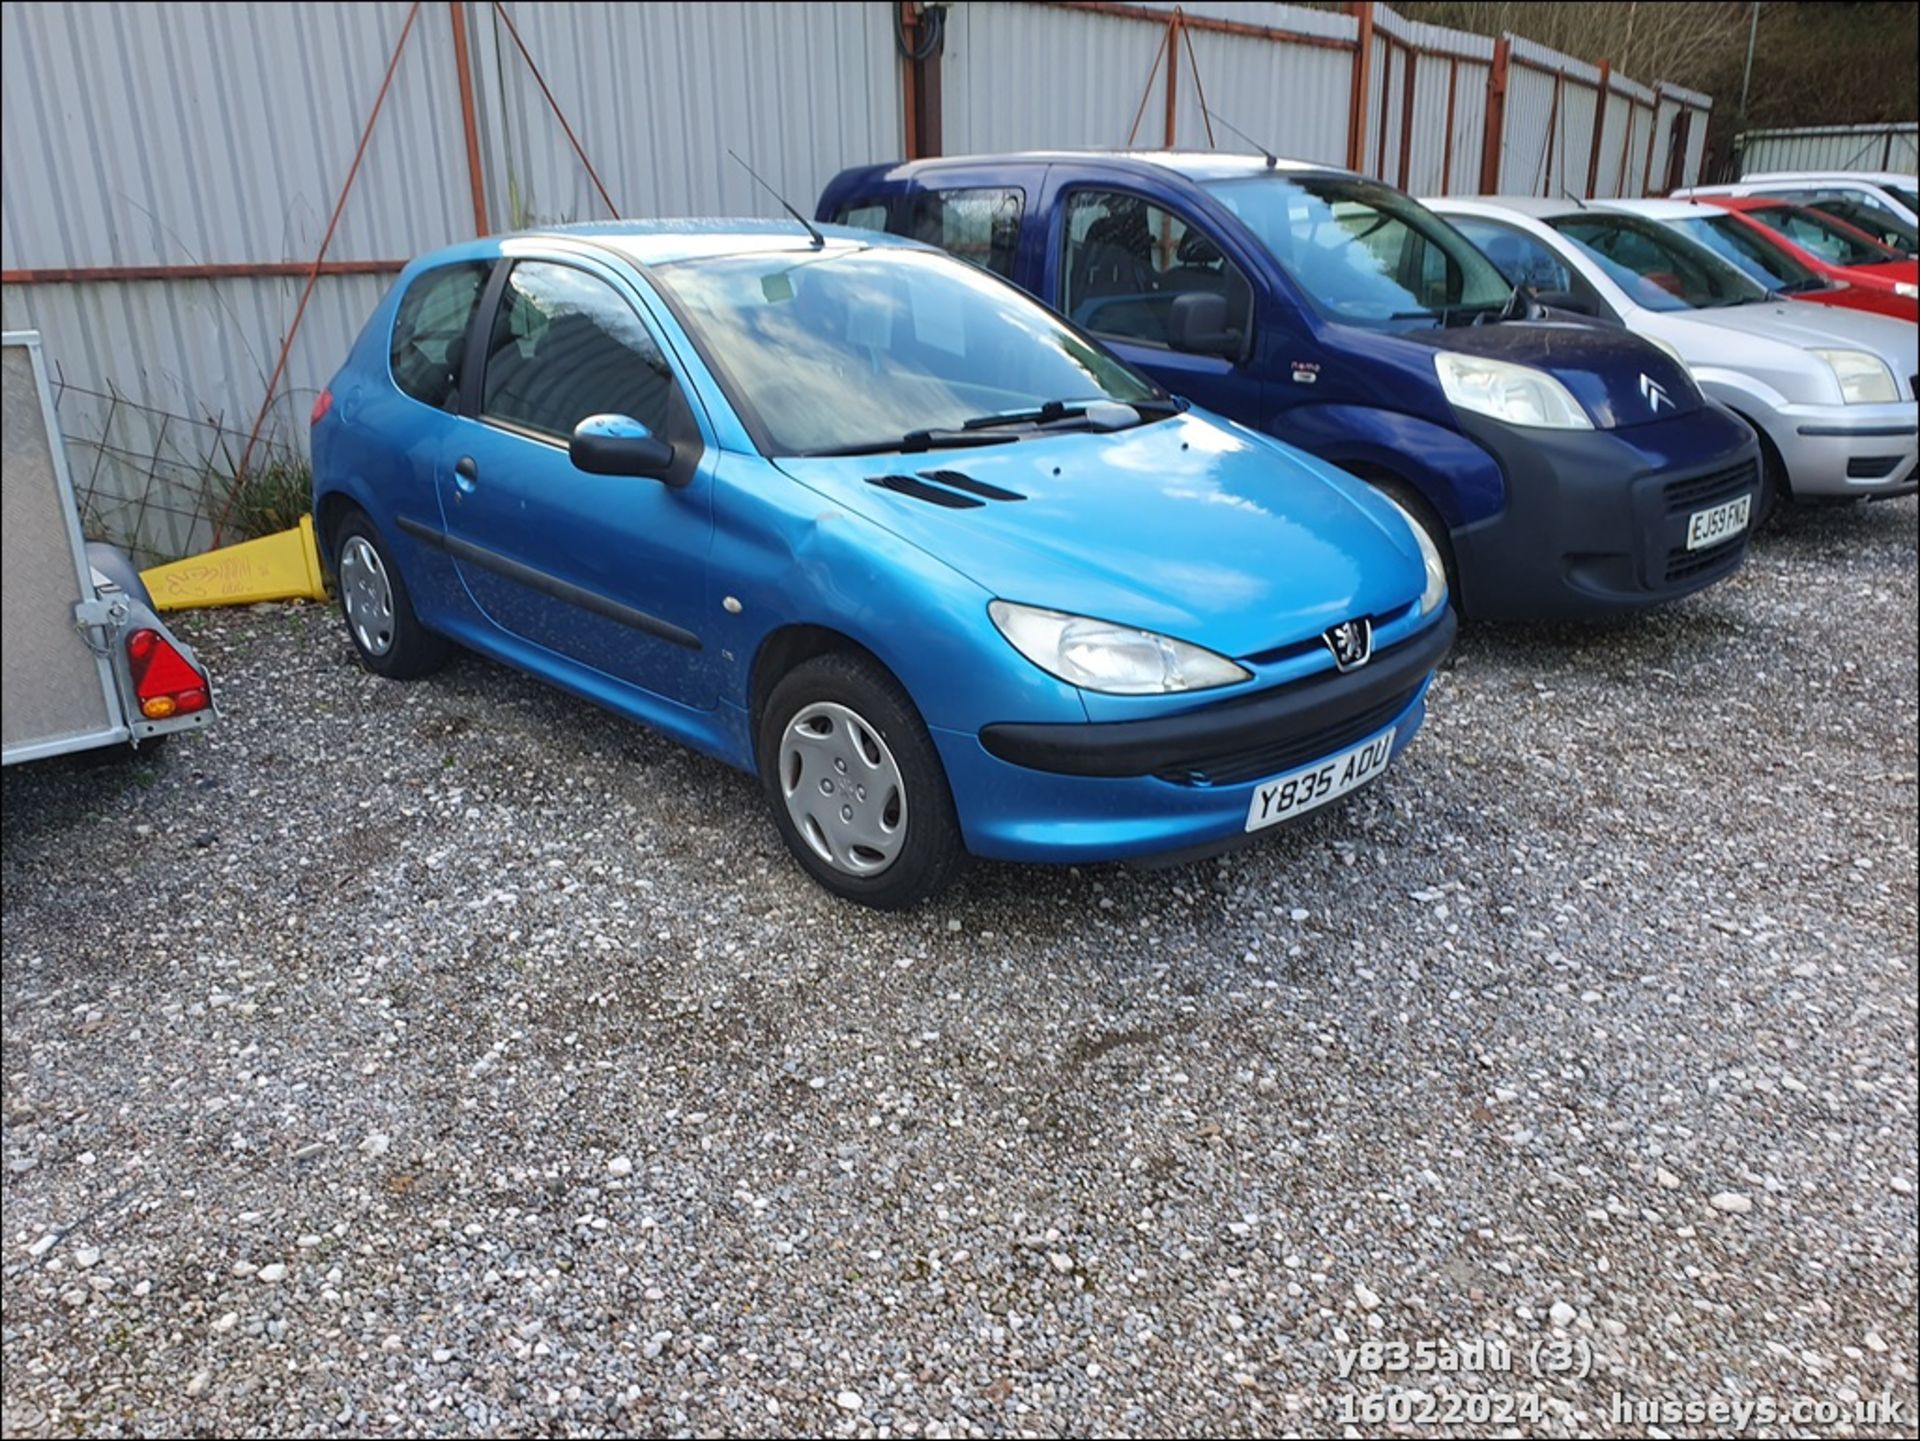 2001 PEUGEOT 206 LX AUTO - 1360cc 3dr Hatchback (Blue, 85k) - Image 4 of 22